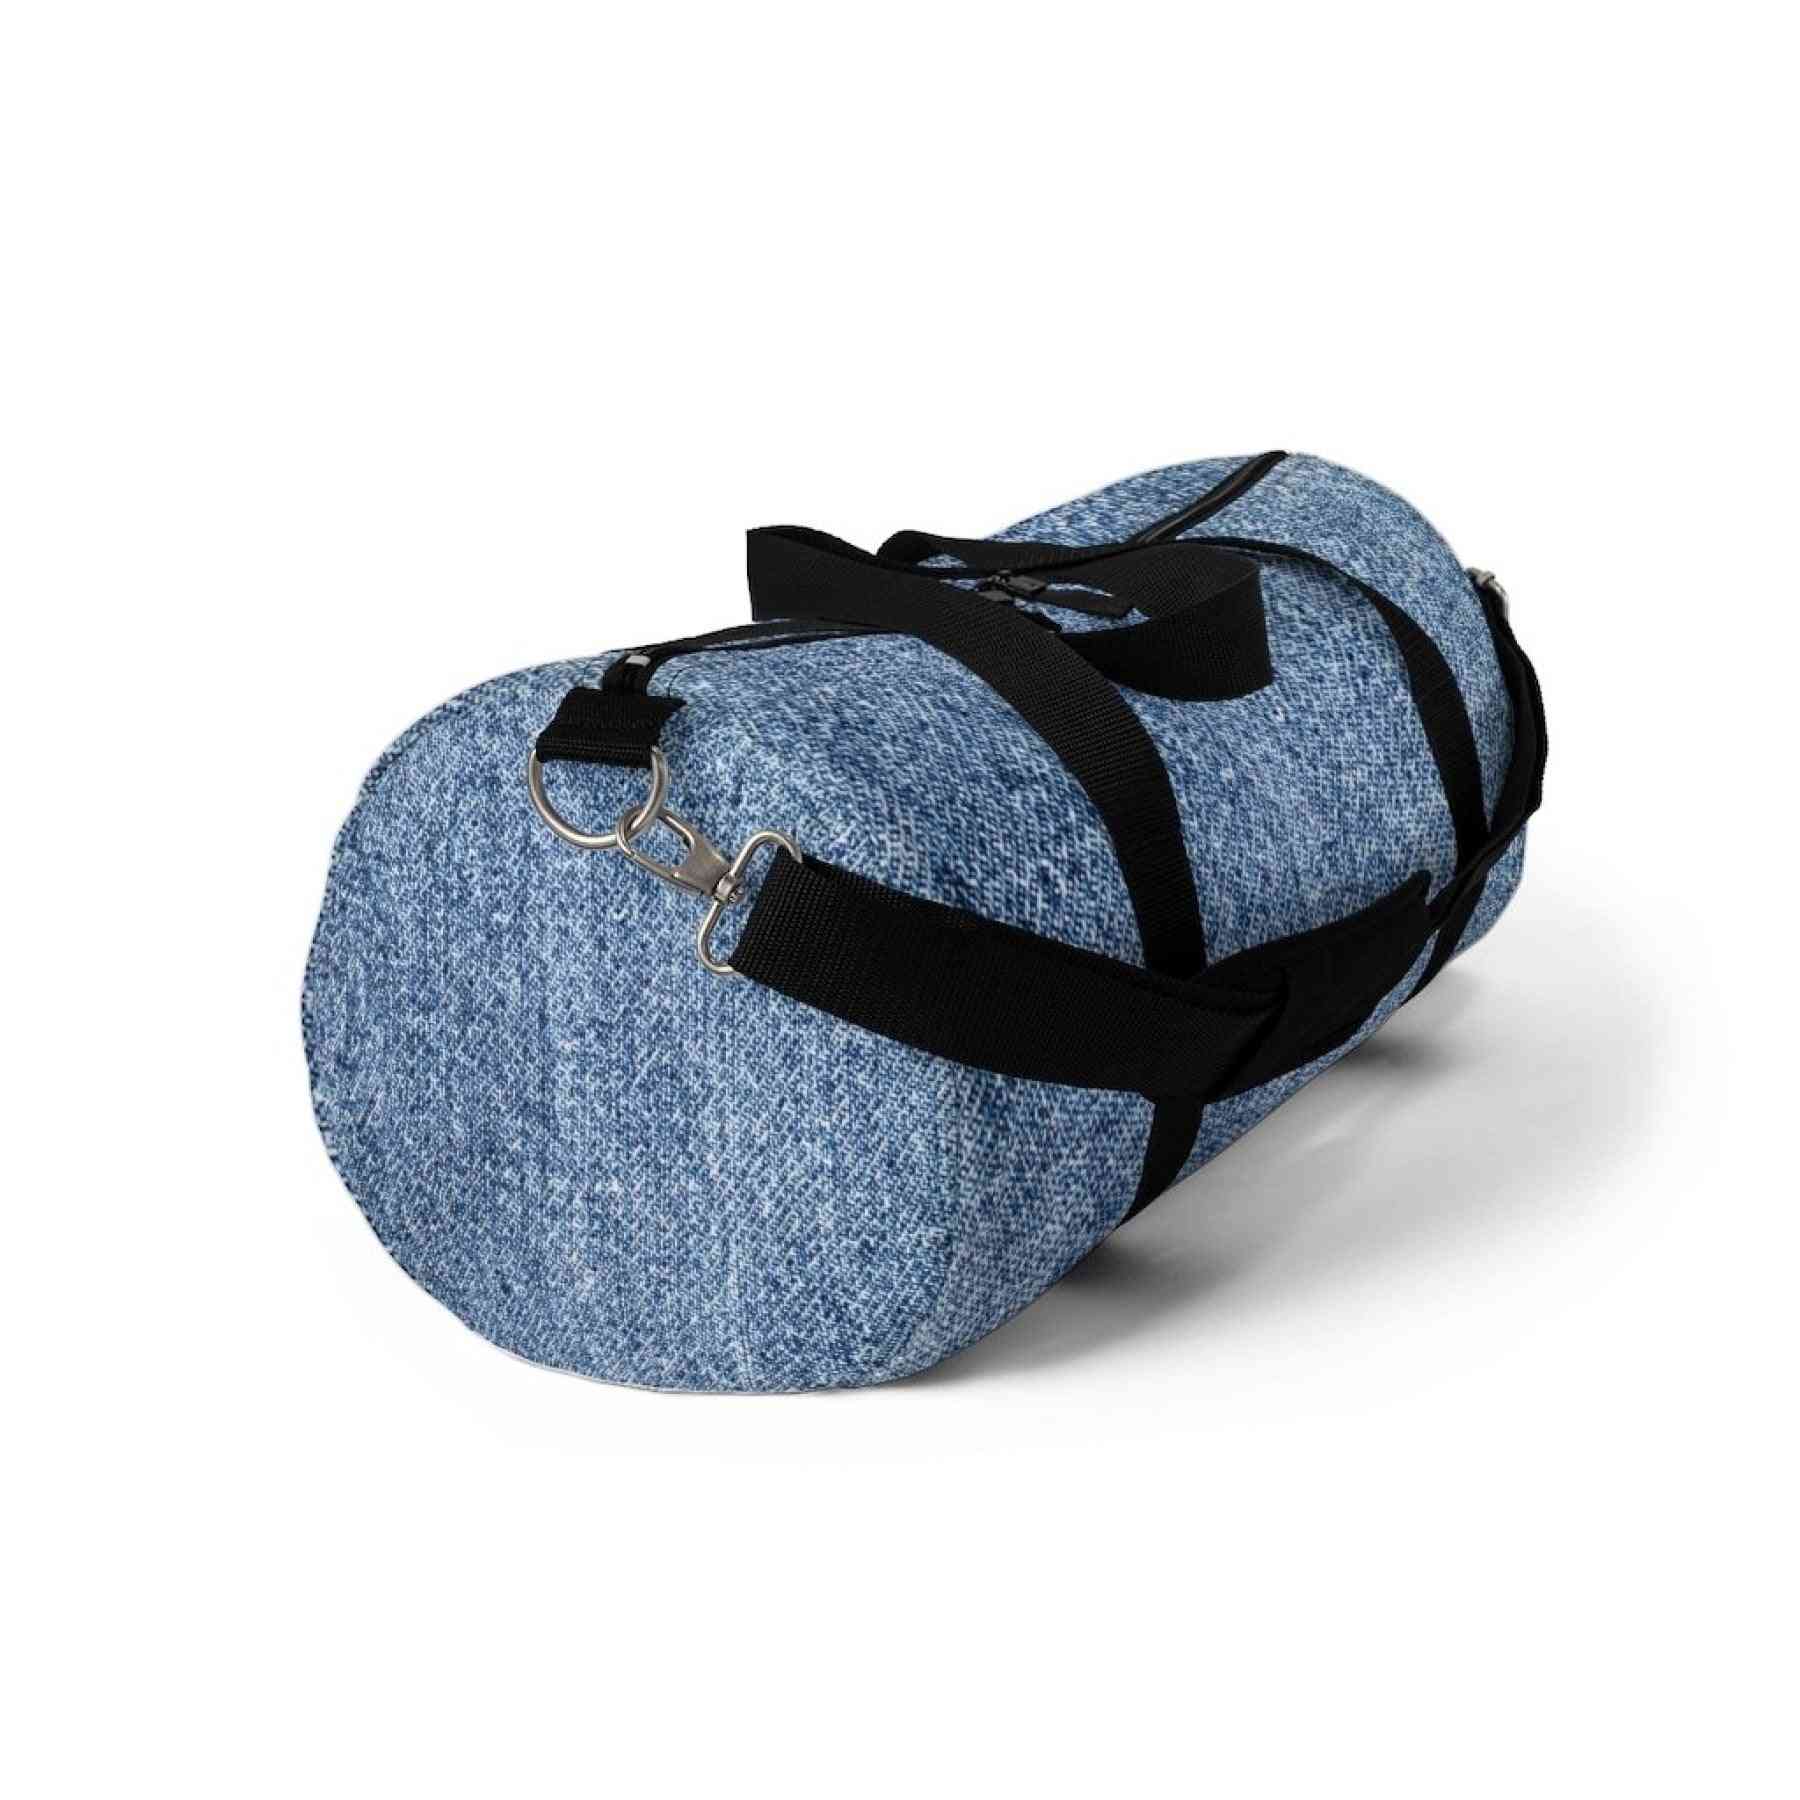 Deep Blue Denim Style Duffel Bags